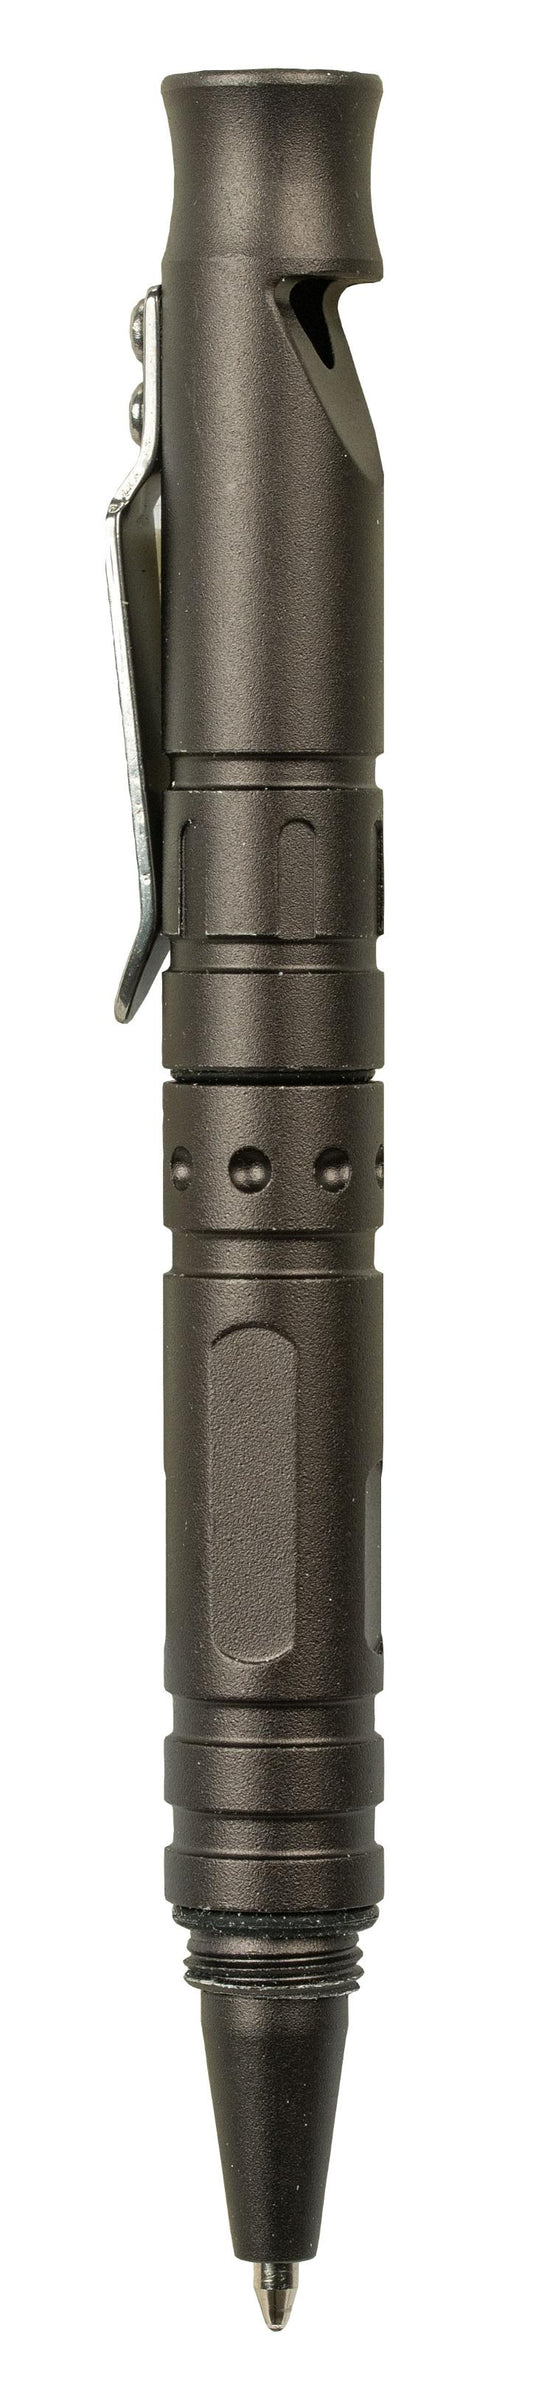 The Grunt Compact Whistle, Glass Breaker Pen - (gray)